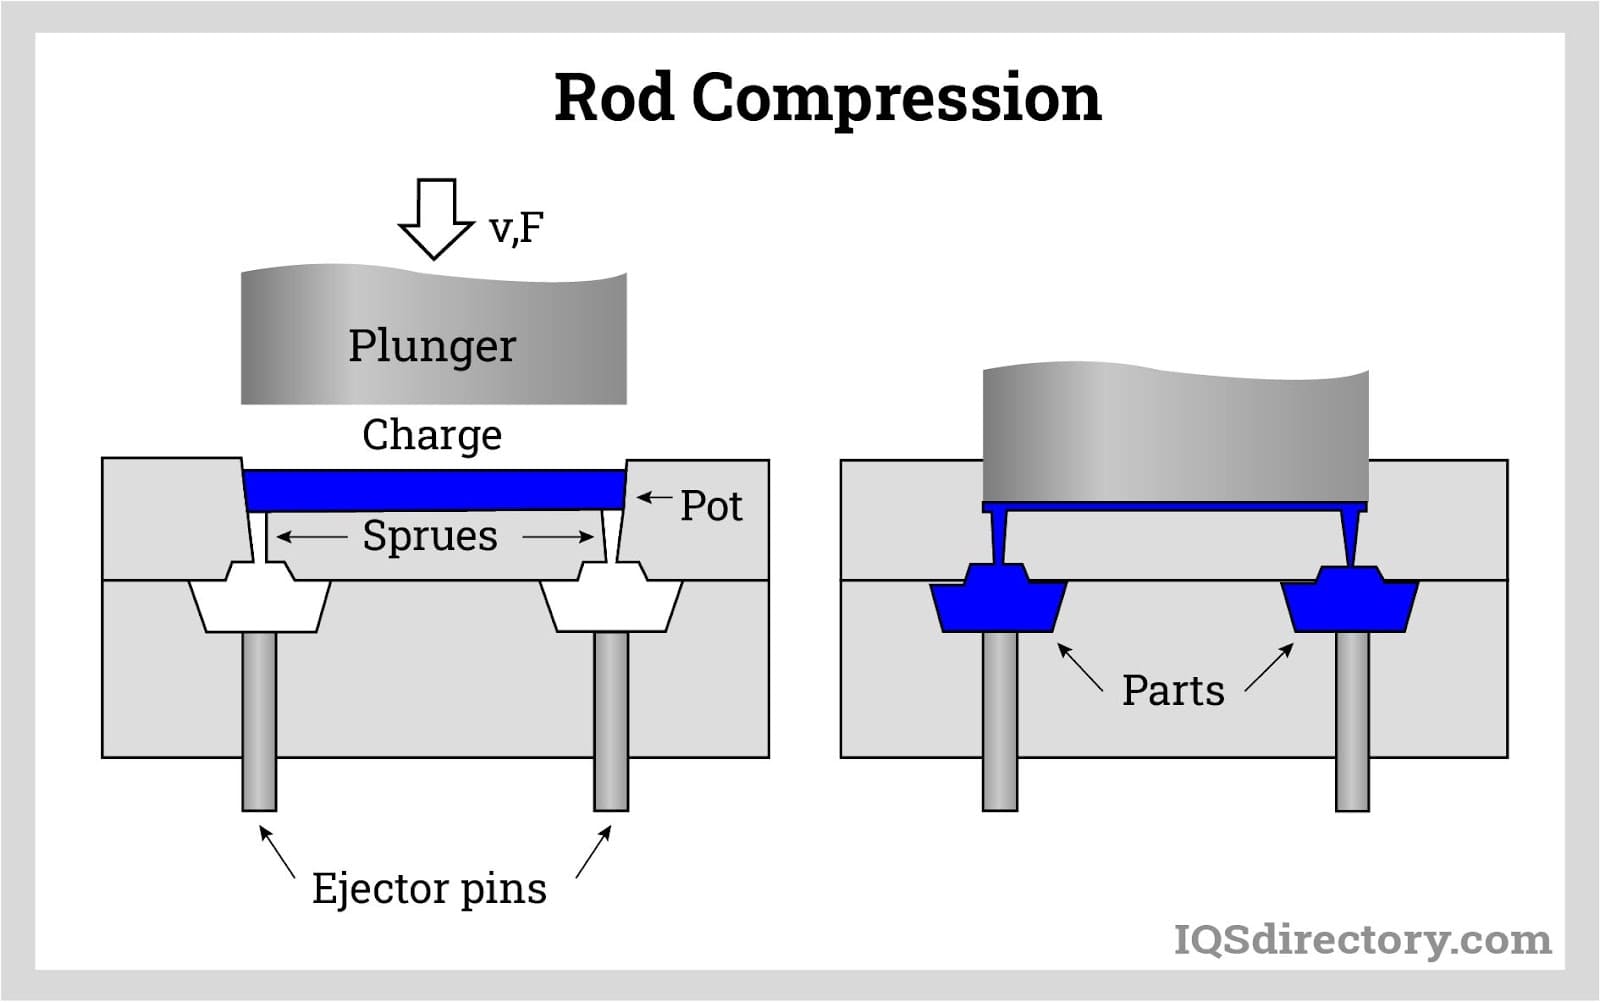 Rod Compression